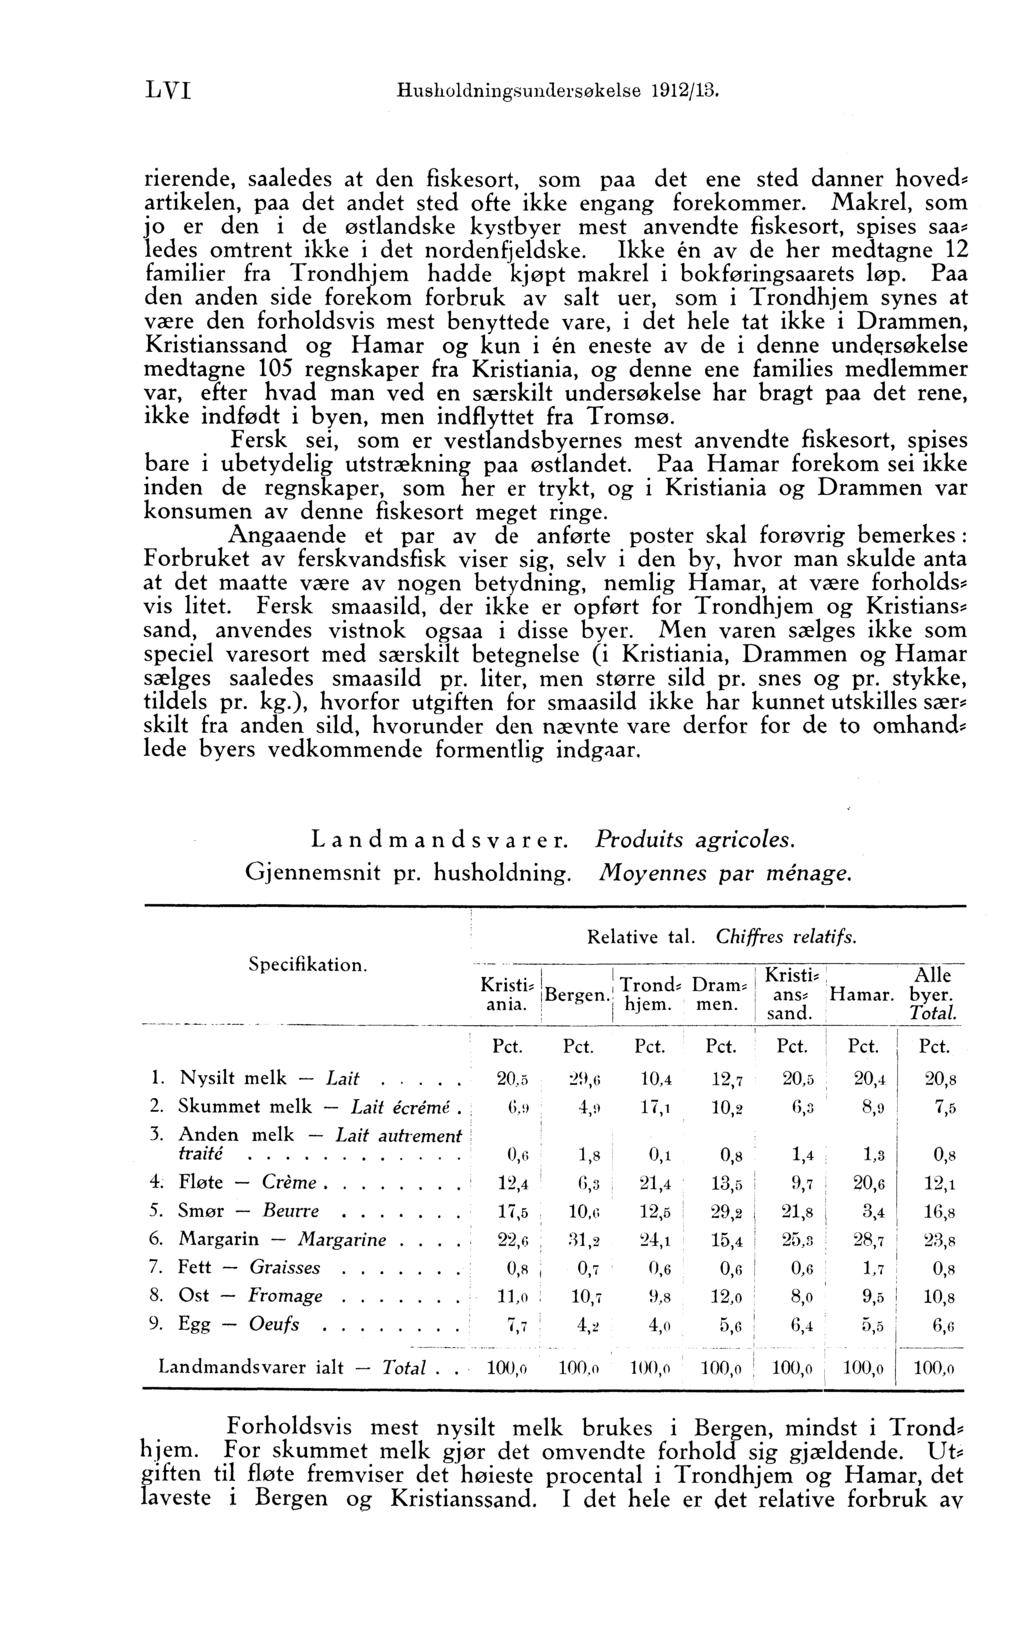 LVI Husholdningsundersøkelse 1912/13. rierende, saaledes at den fiskesort, som paa det ene sted danner hoved, artikelen, paa det andet sted ofte ikke engang forekommer.